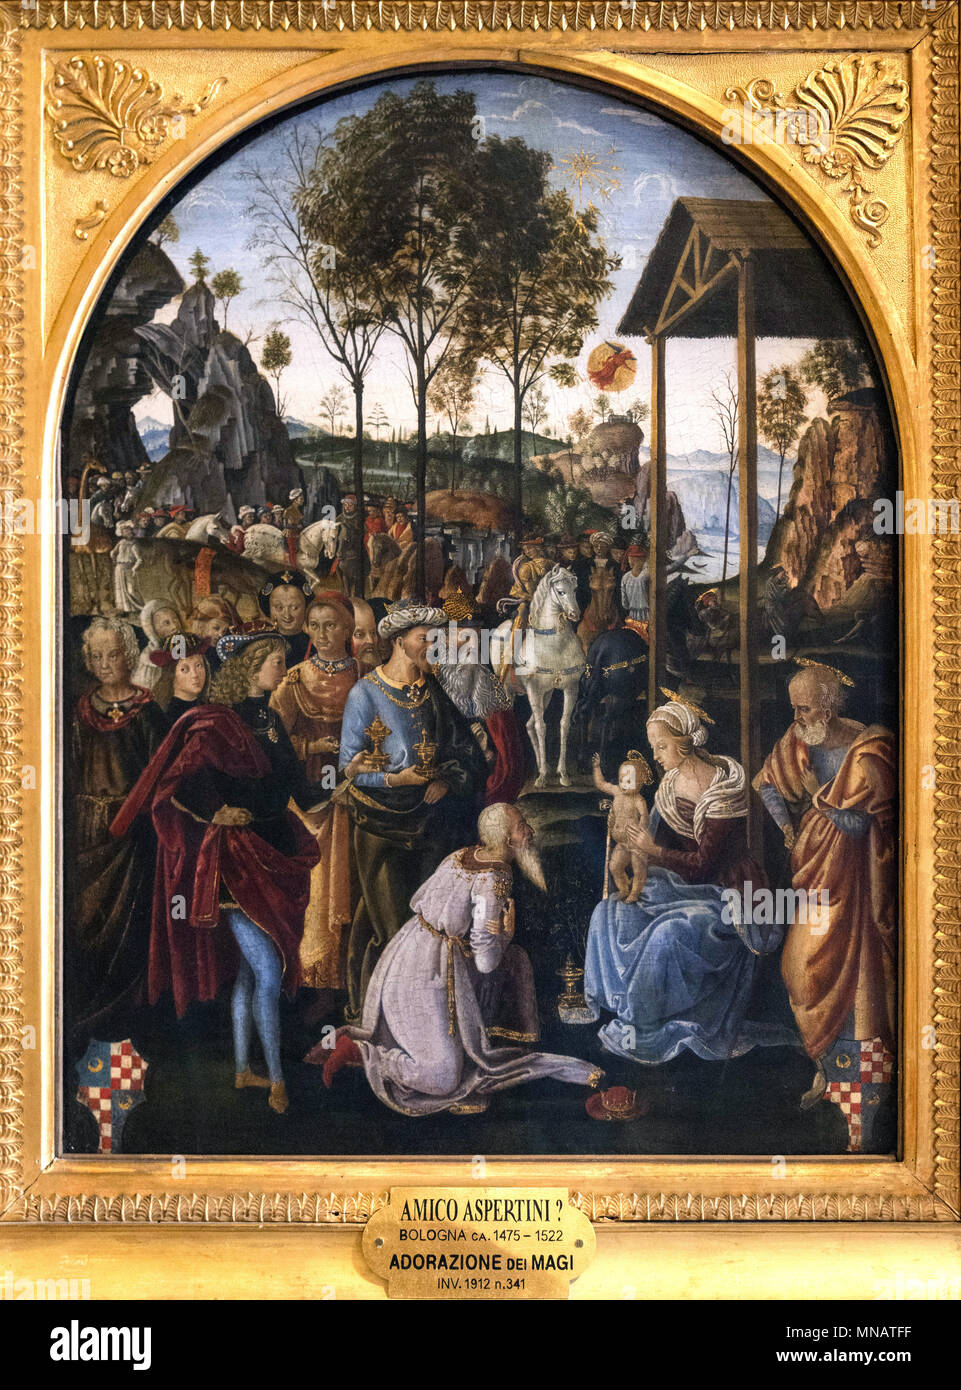 Amico ASPERTINI - Adoration of the Magi  - Gallery Pitti Palace Florence Italy Stock Photo